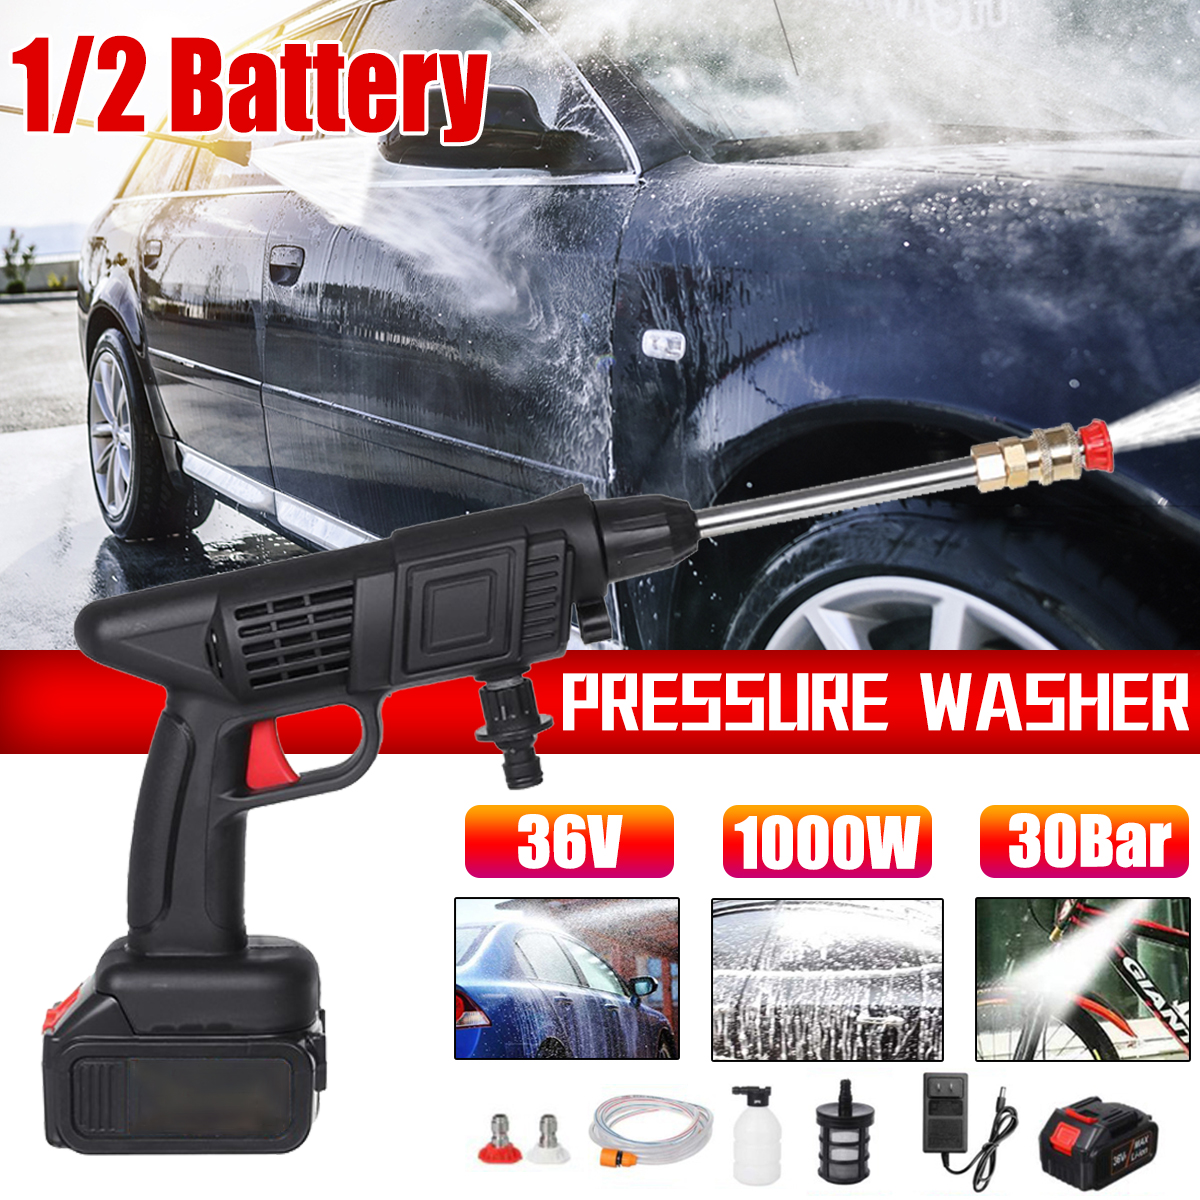 36V-1000W-Wireless-High-Pressure-Washer-Car-Washing-Machine-Water-Wash-Spray-Guns-W-None12-Battery-1866606-13